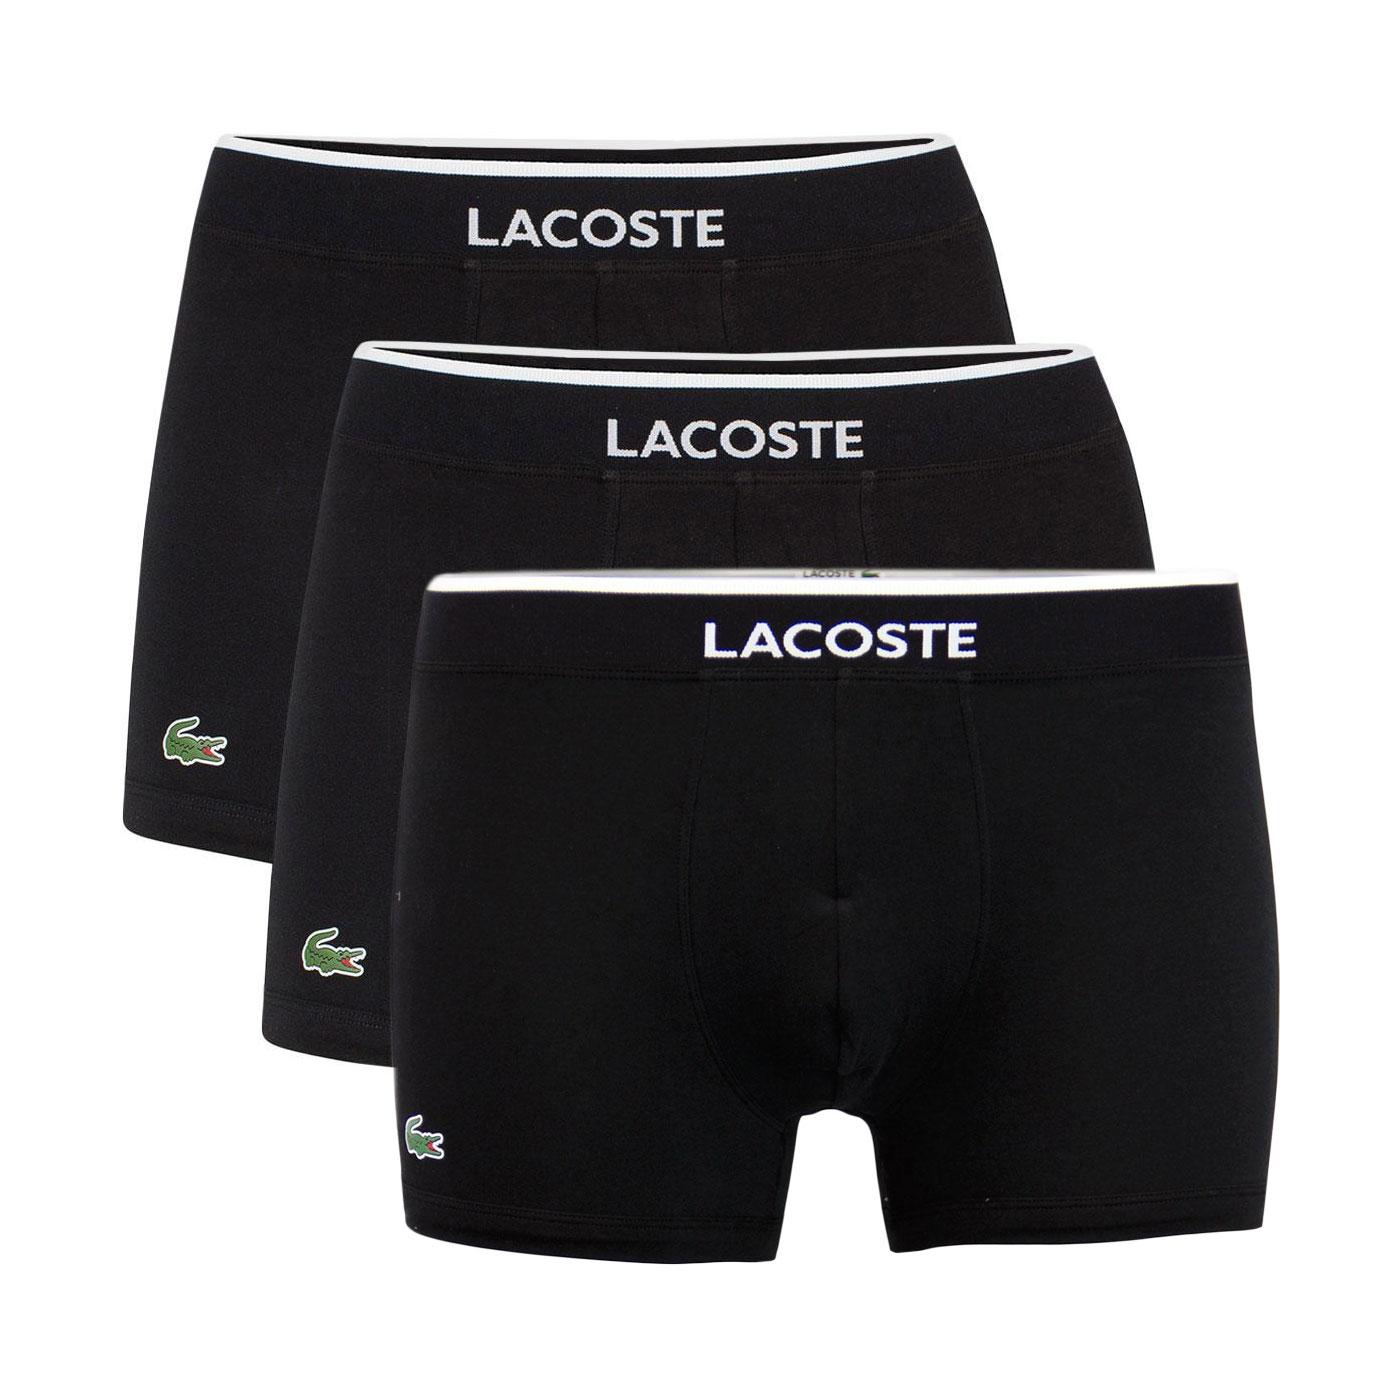 + LACOSTE Men's 3 Pack Cotton Stretch Trunks BLACK